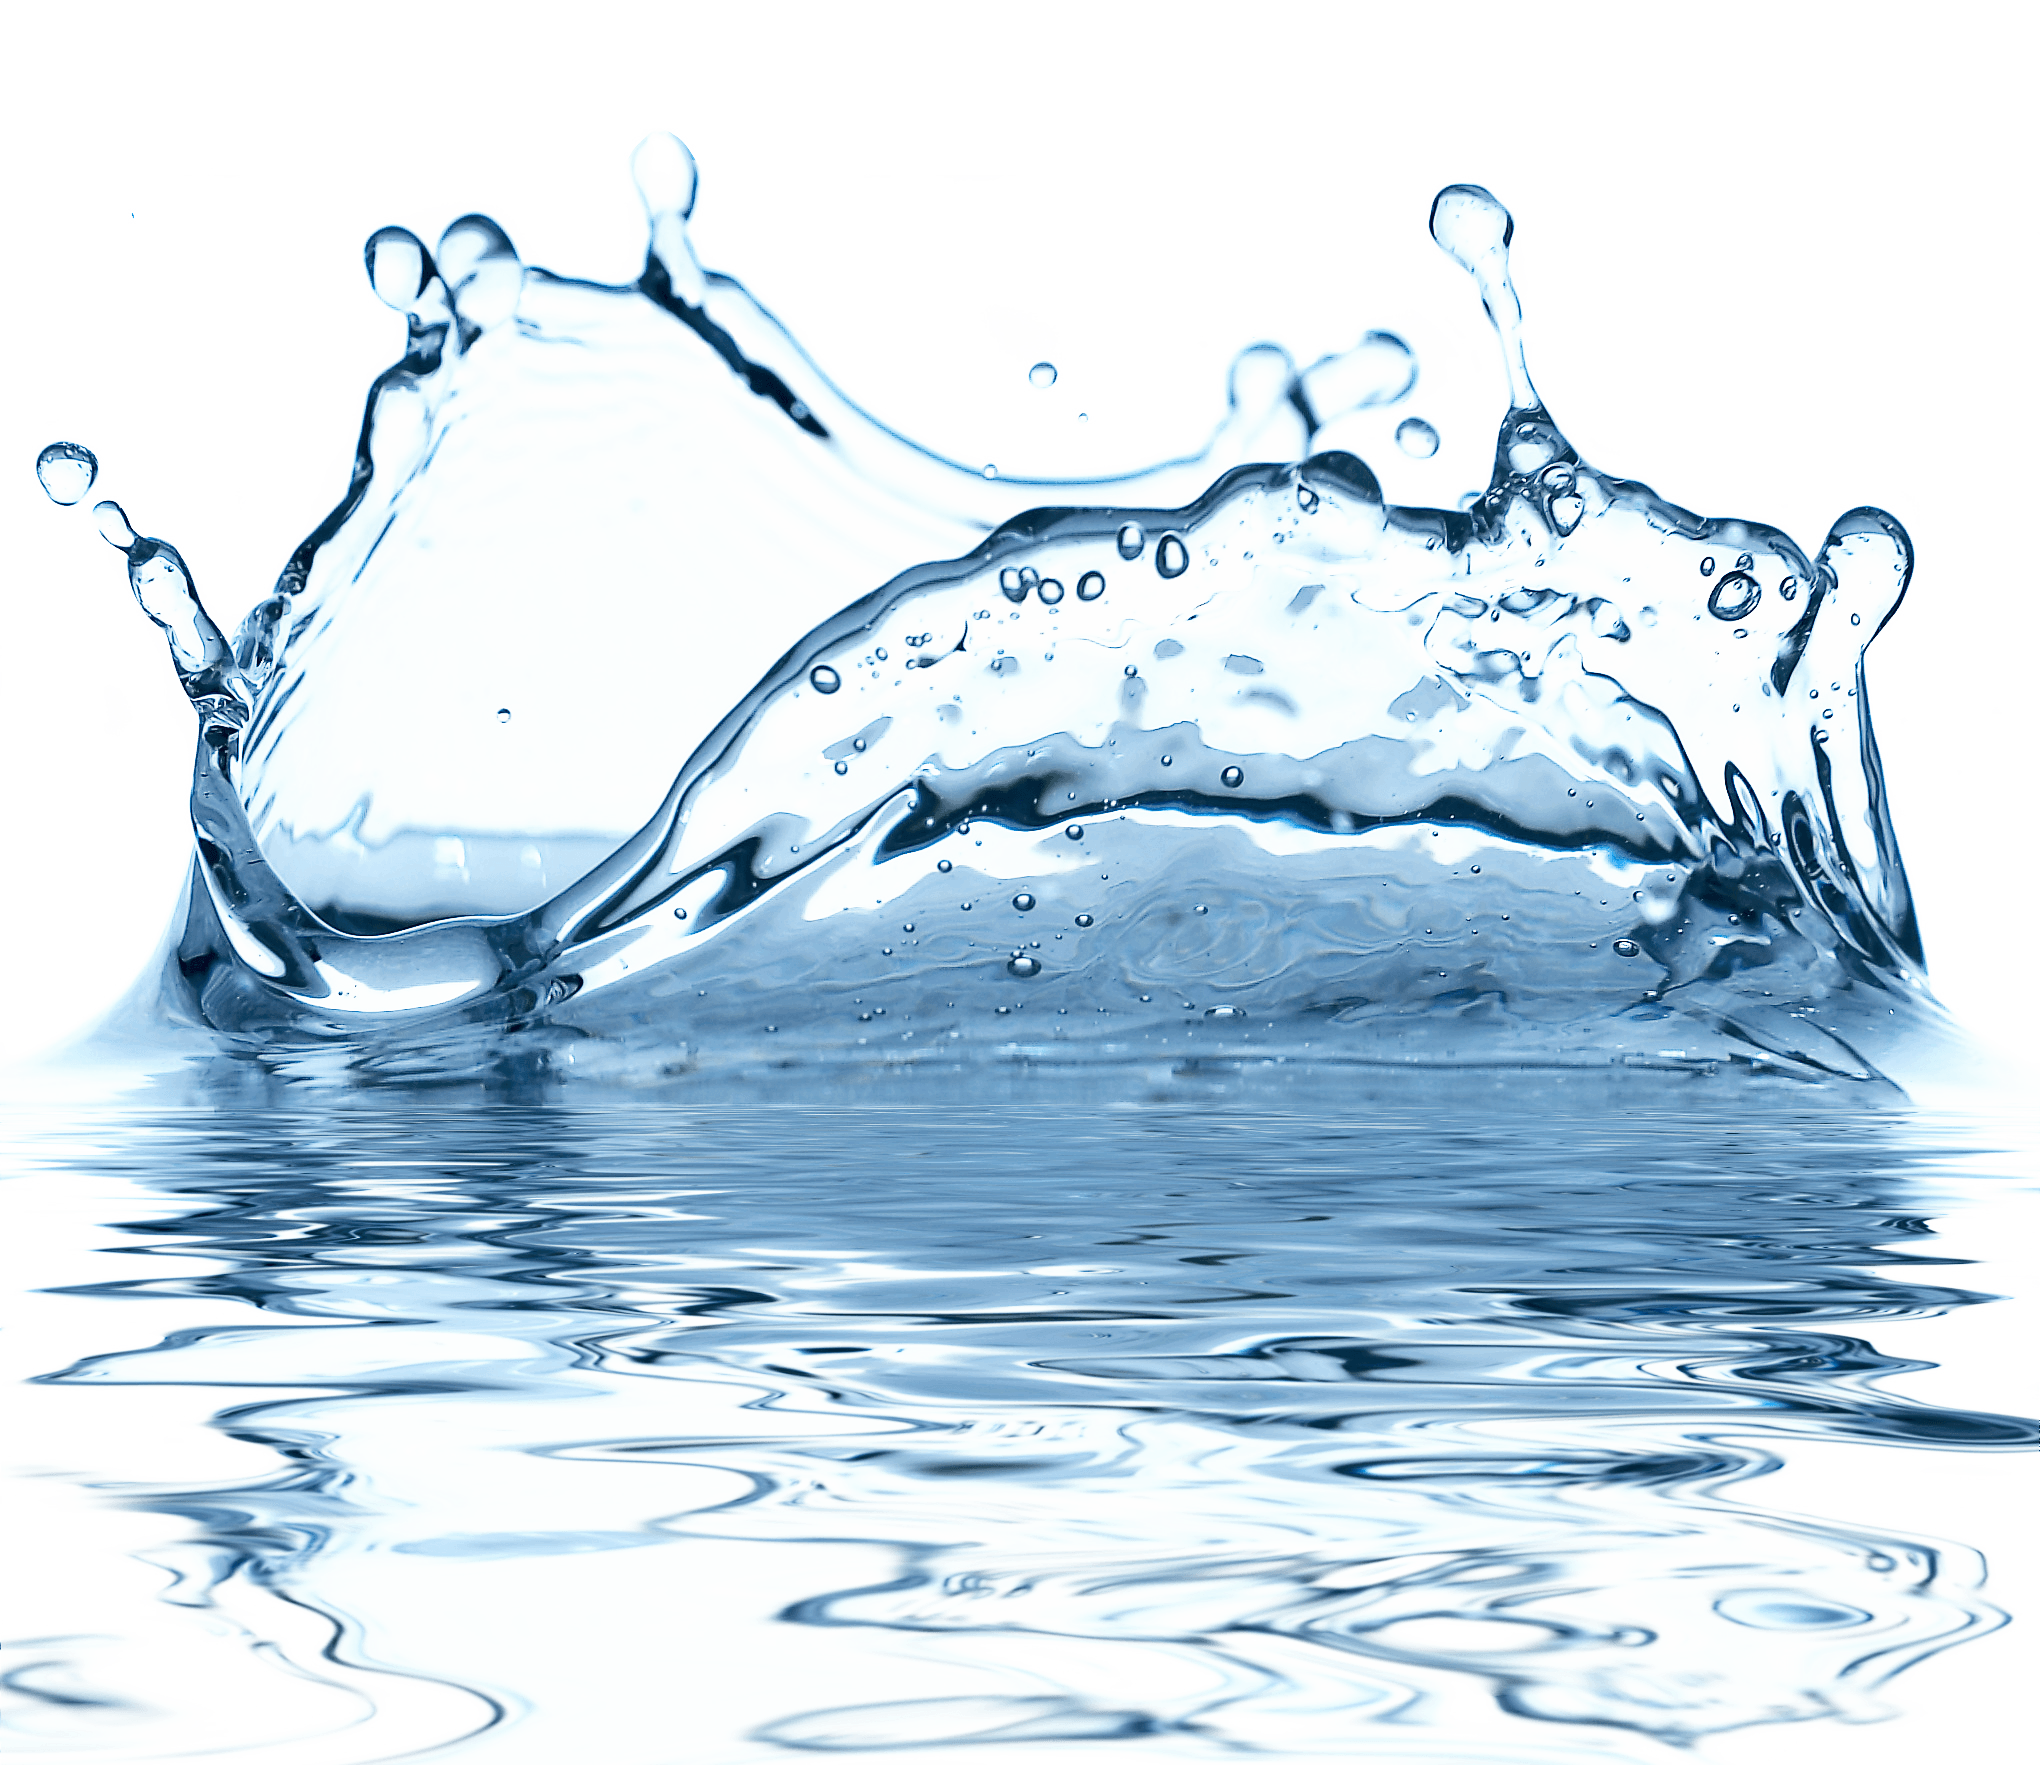 Blue Splash Water PNG High Quality Image